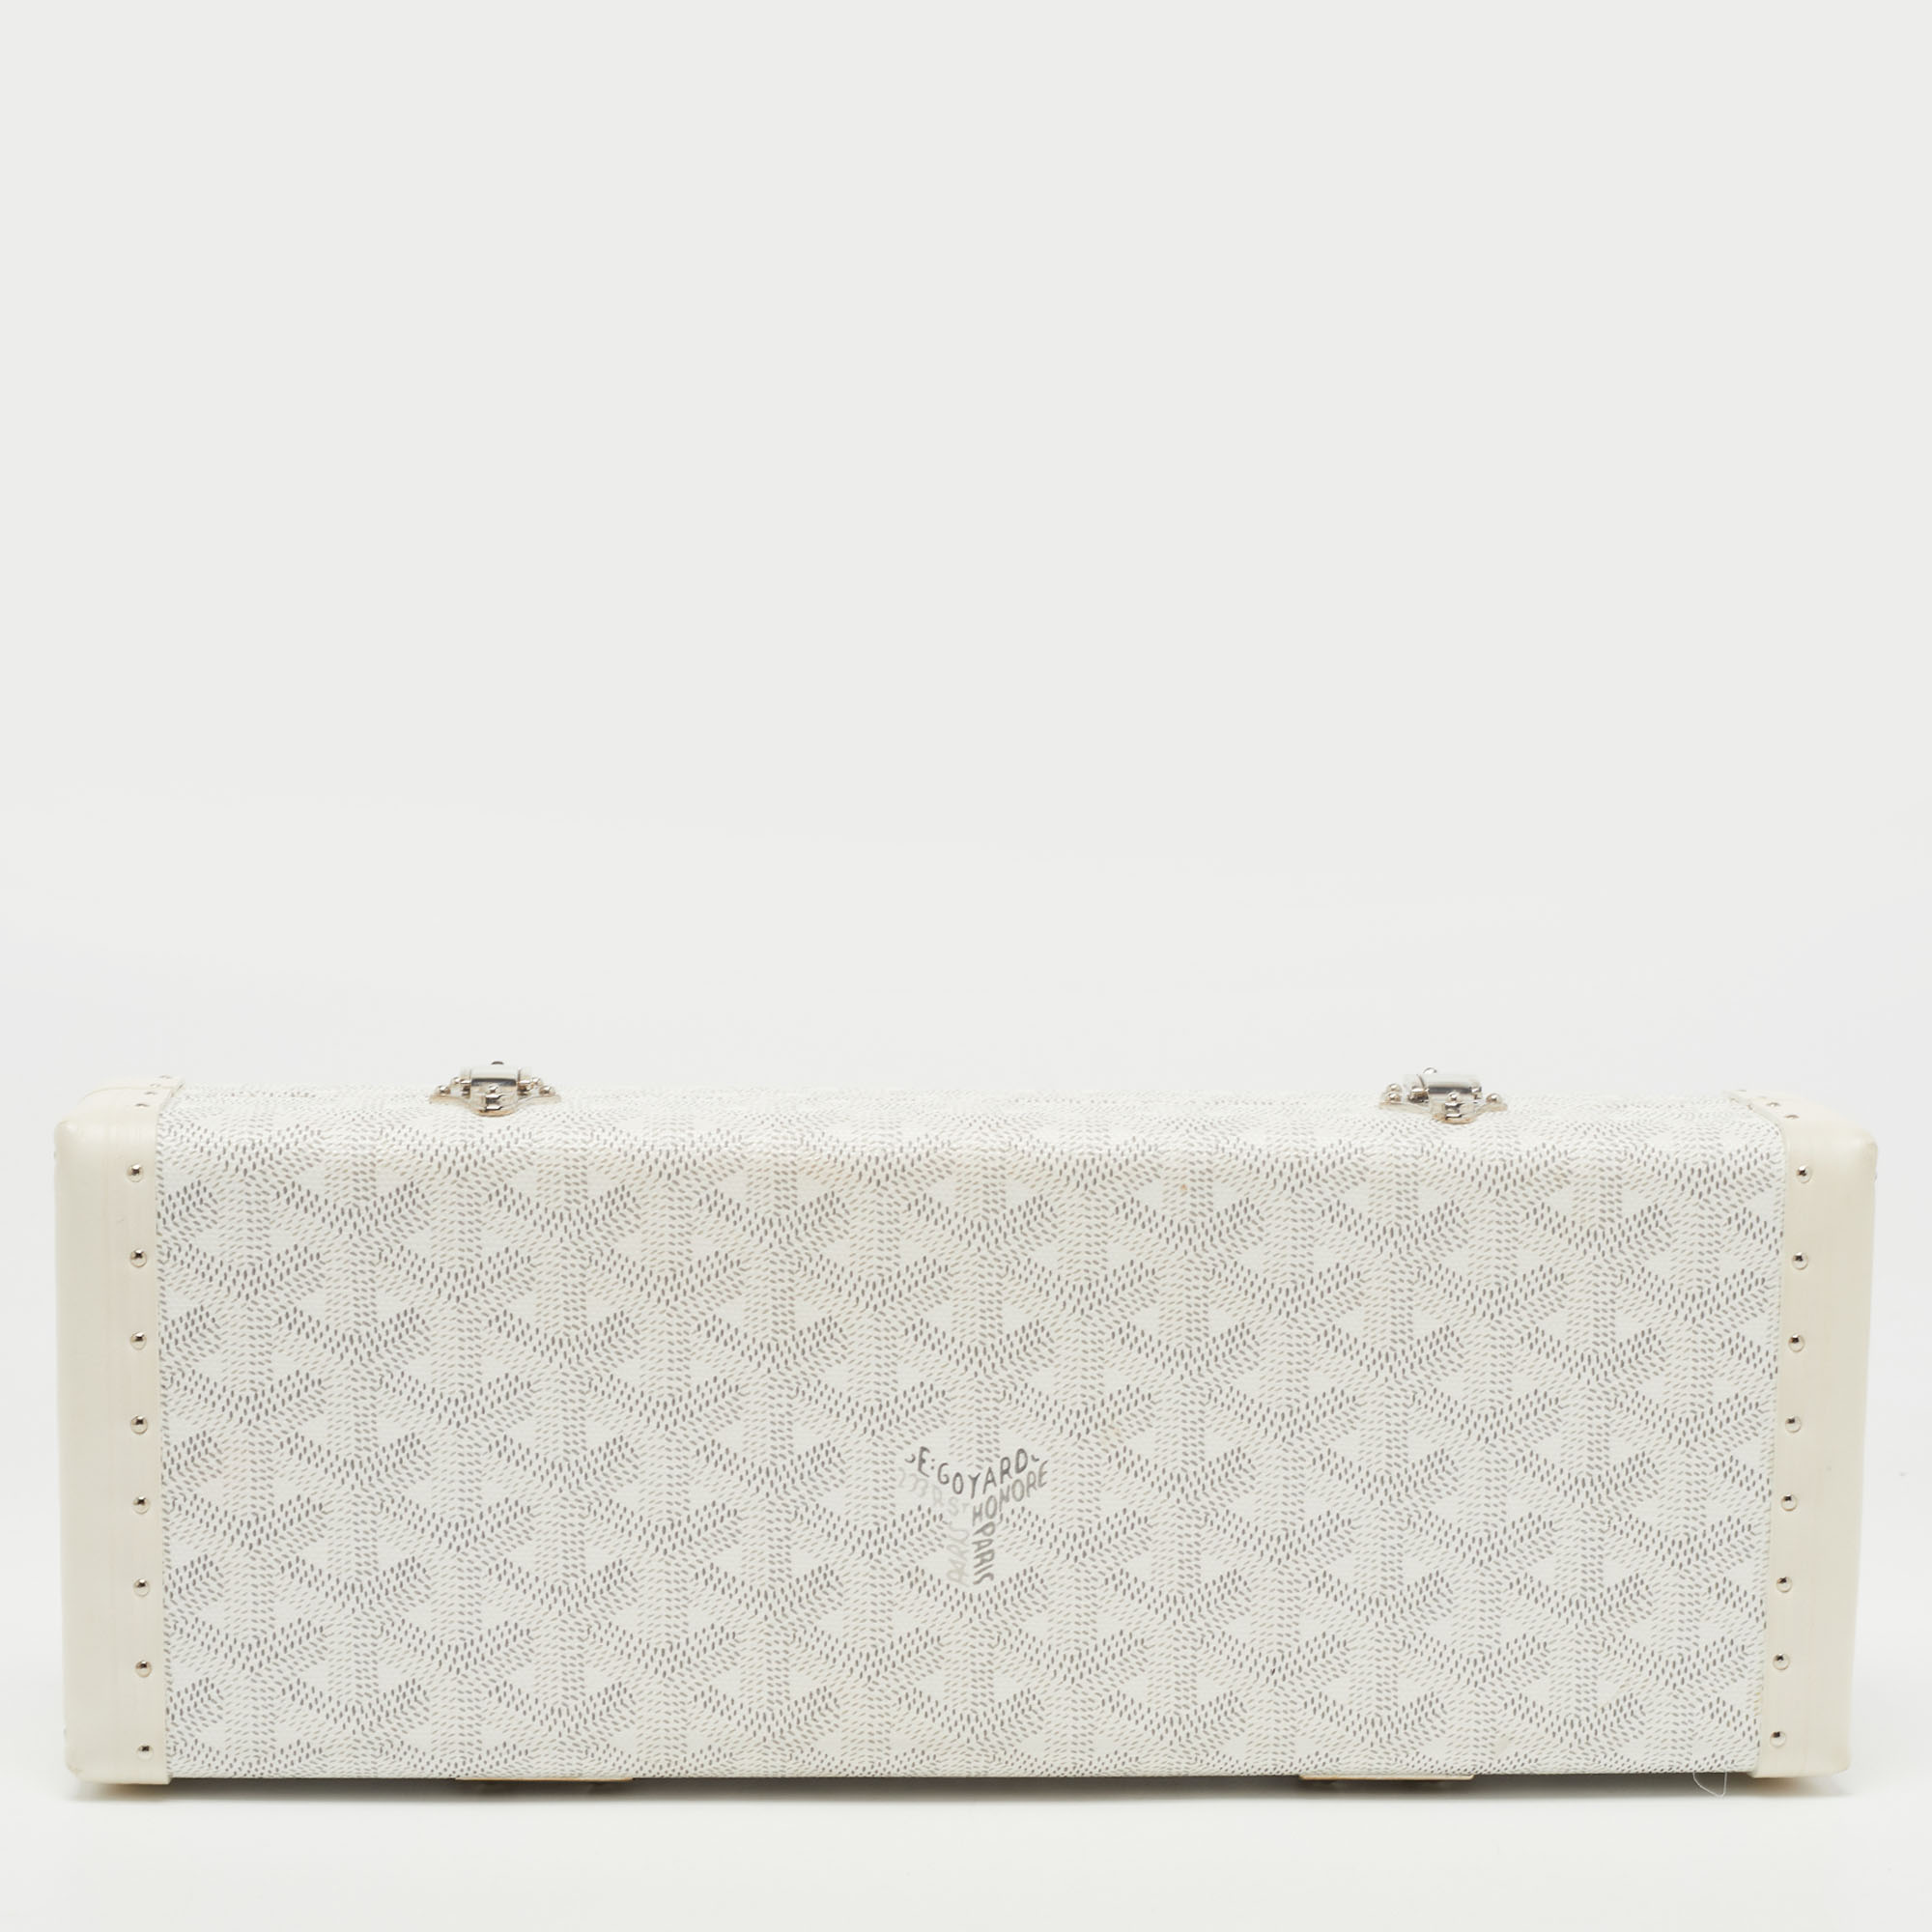 Goyard Saint-Honore Clutch - Clutches, Handbags - GOY20150